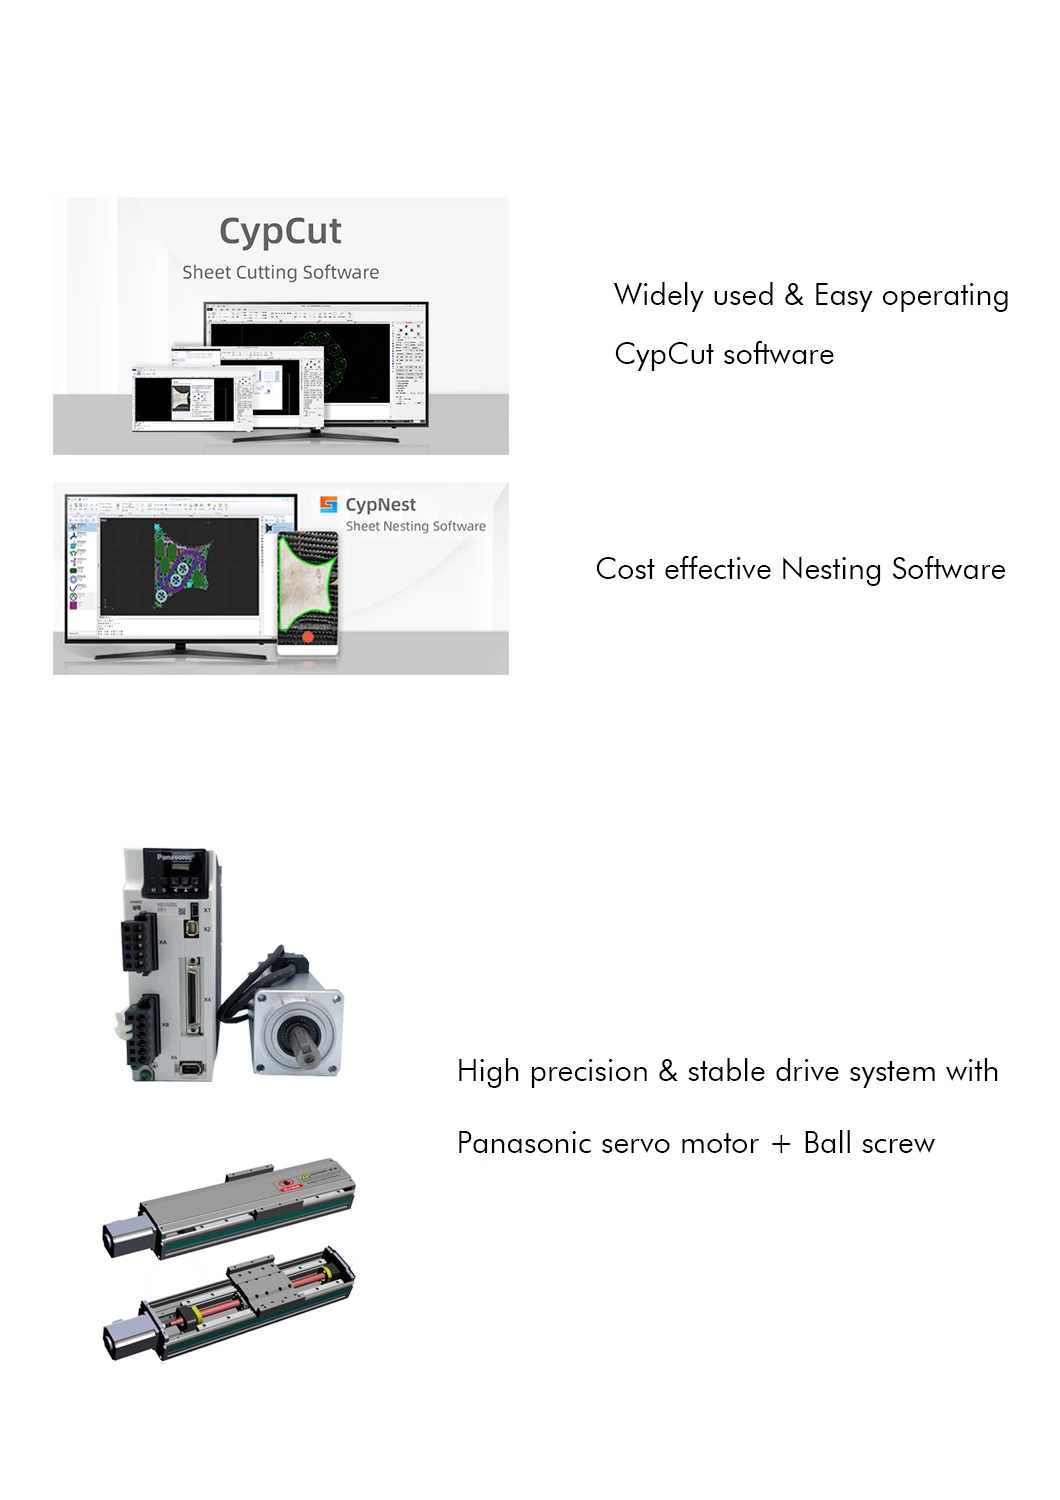 CNC Portable 1000W 1500W High Precision Fiber Laser Cutting Machine for Metal